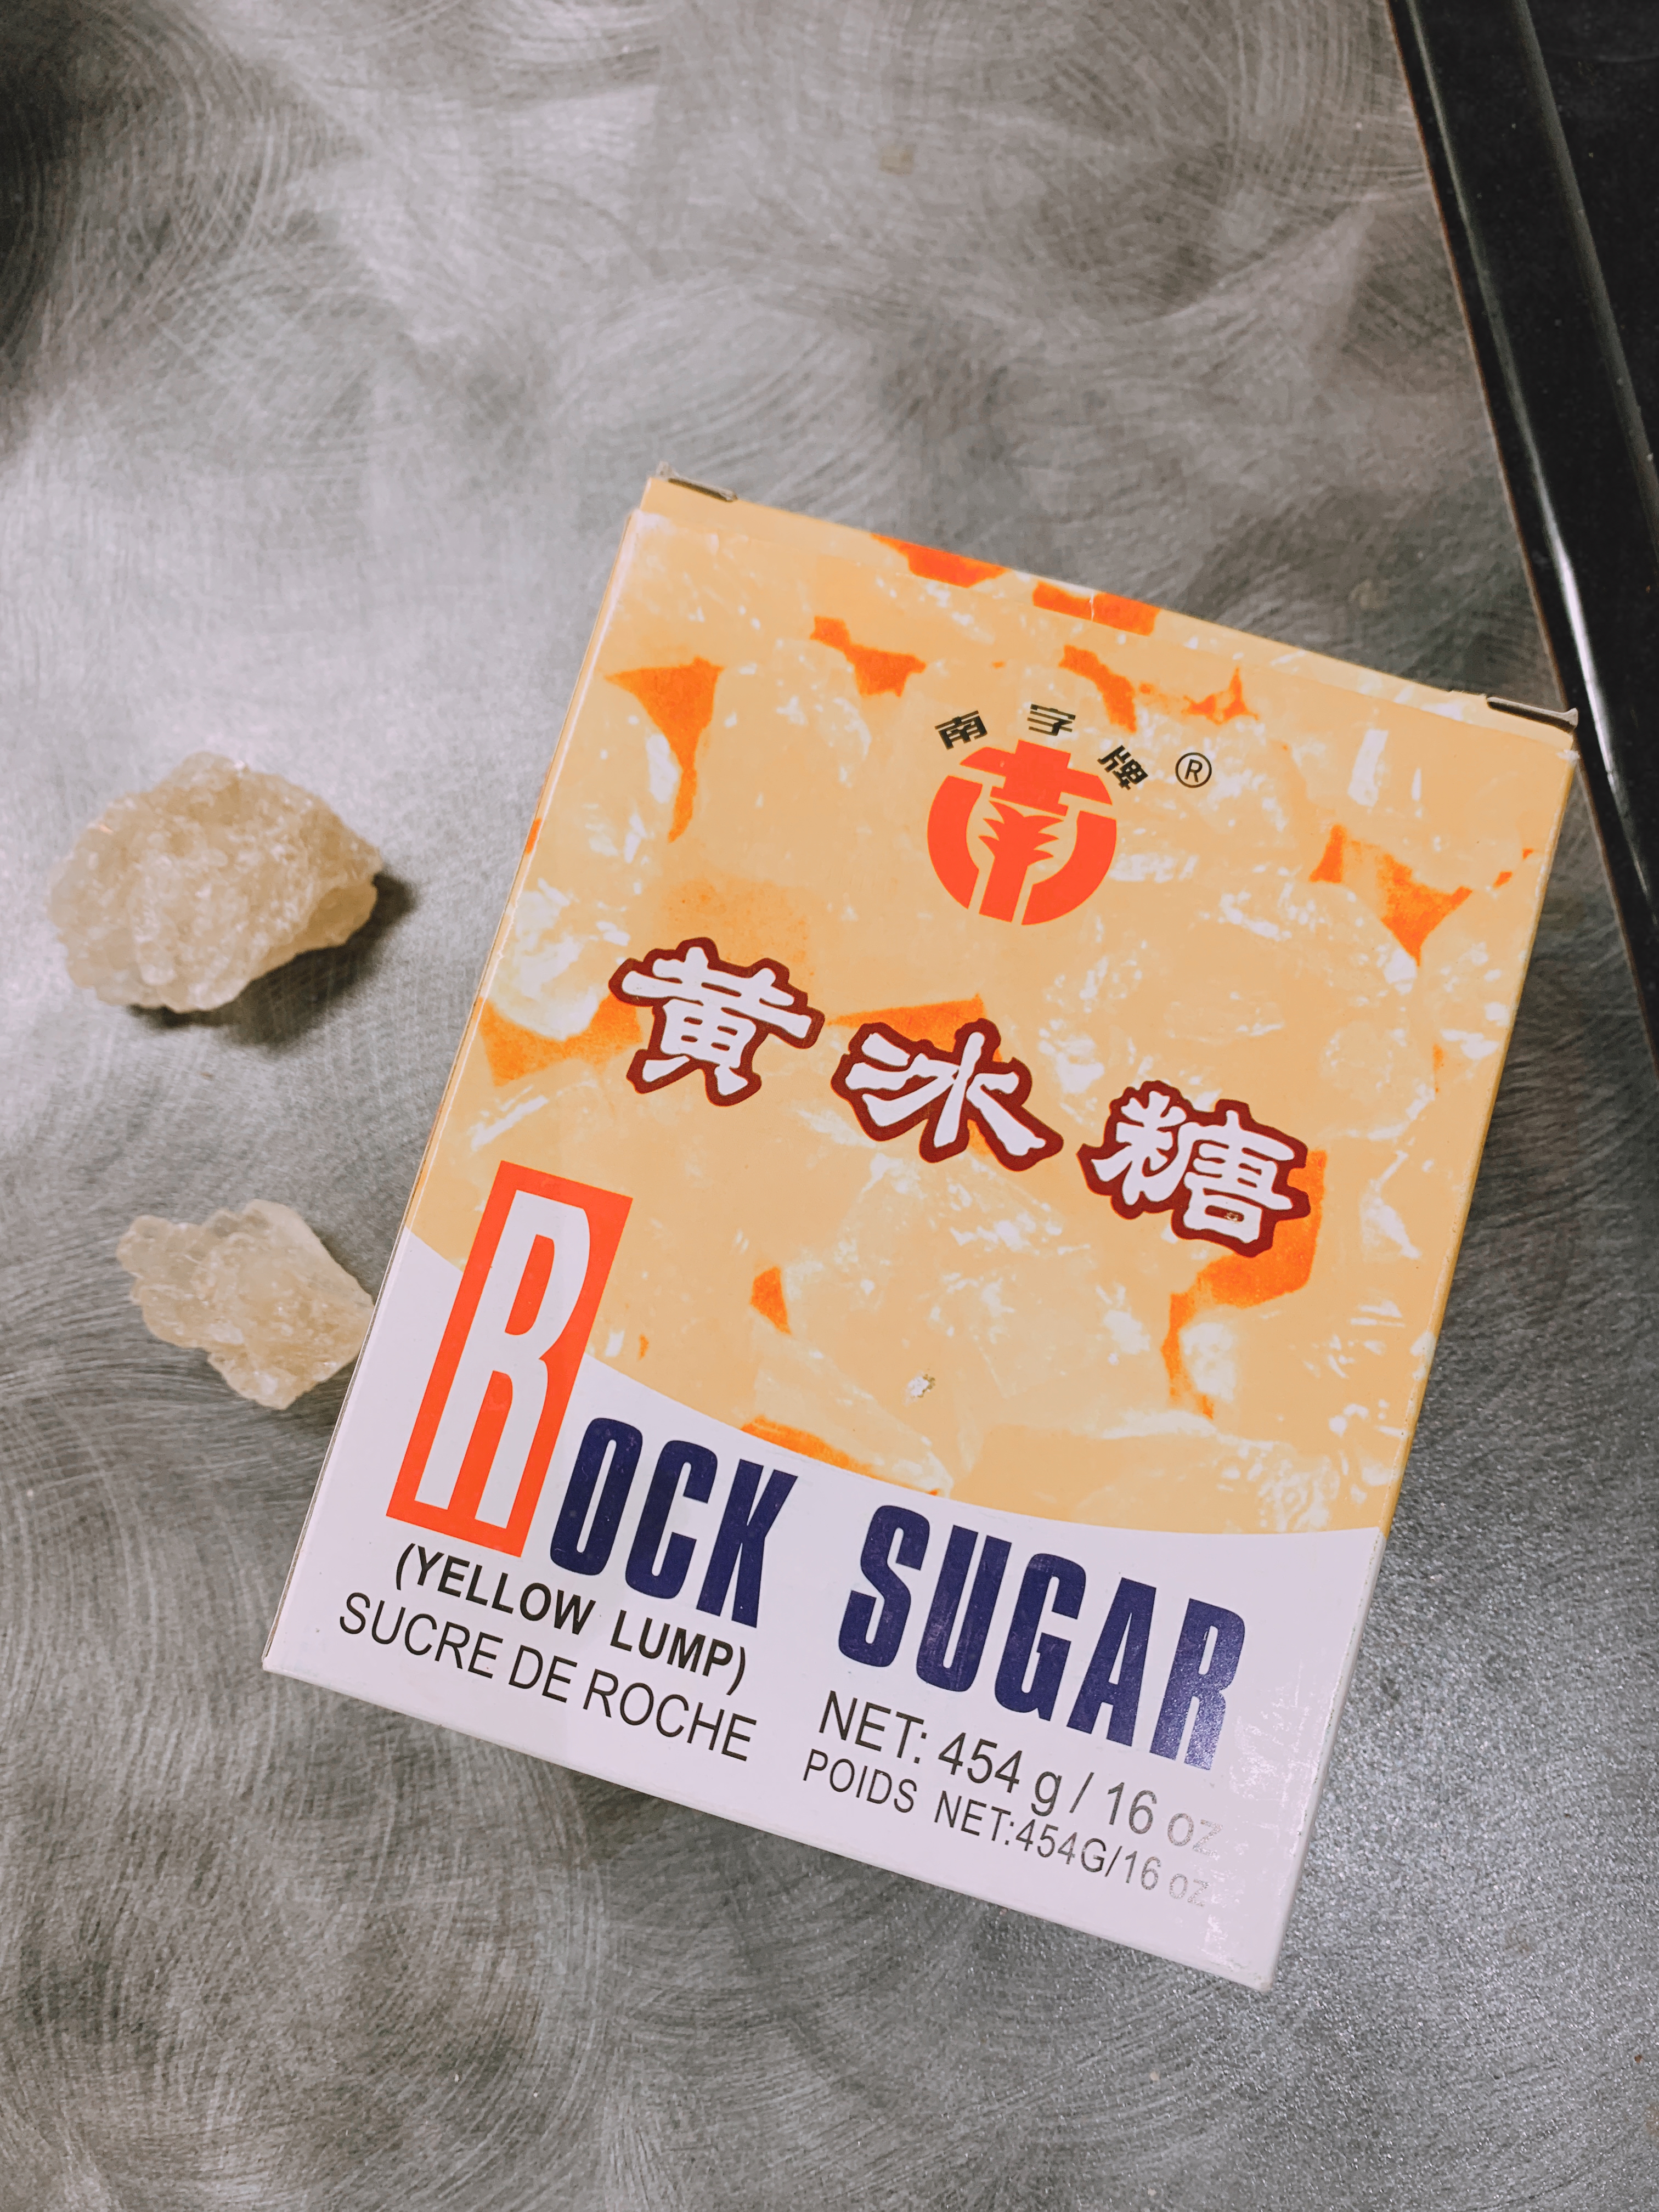 rock sugar for dessert